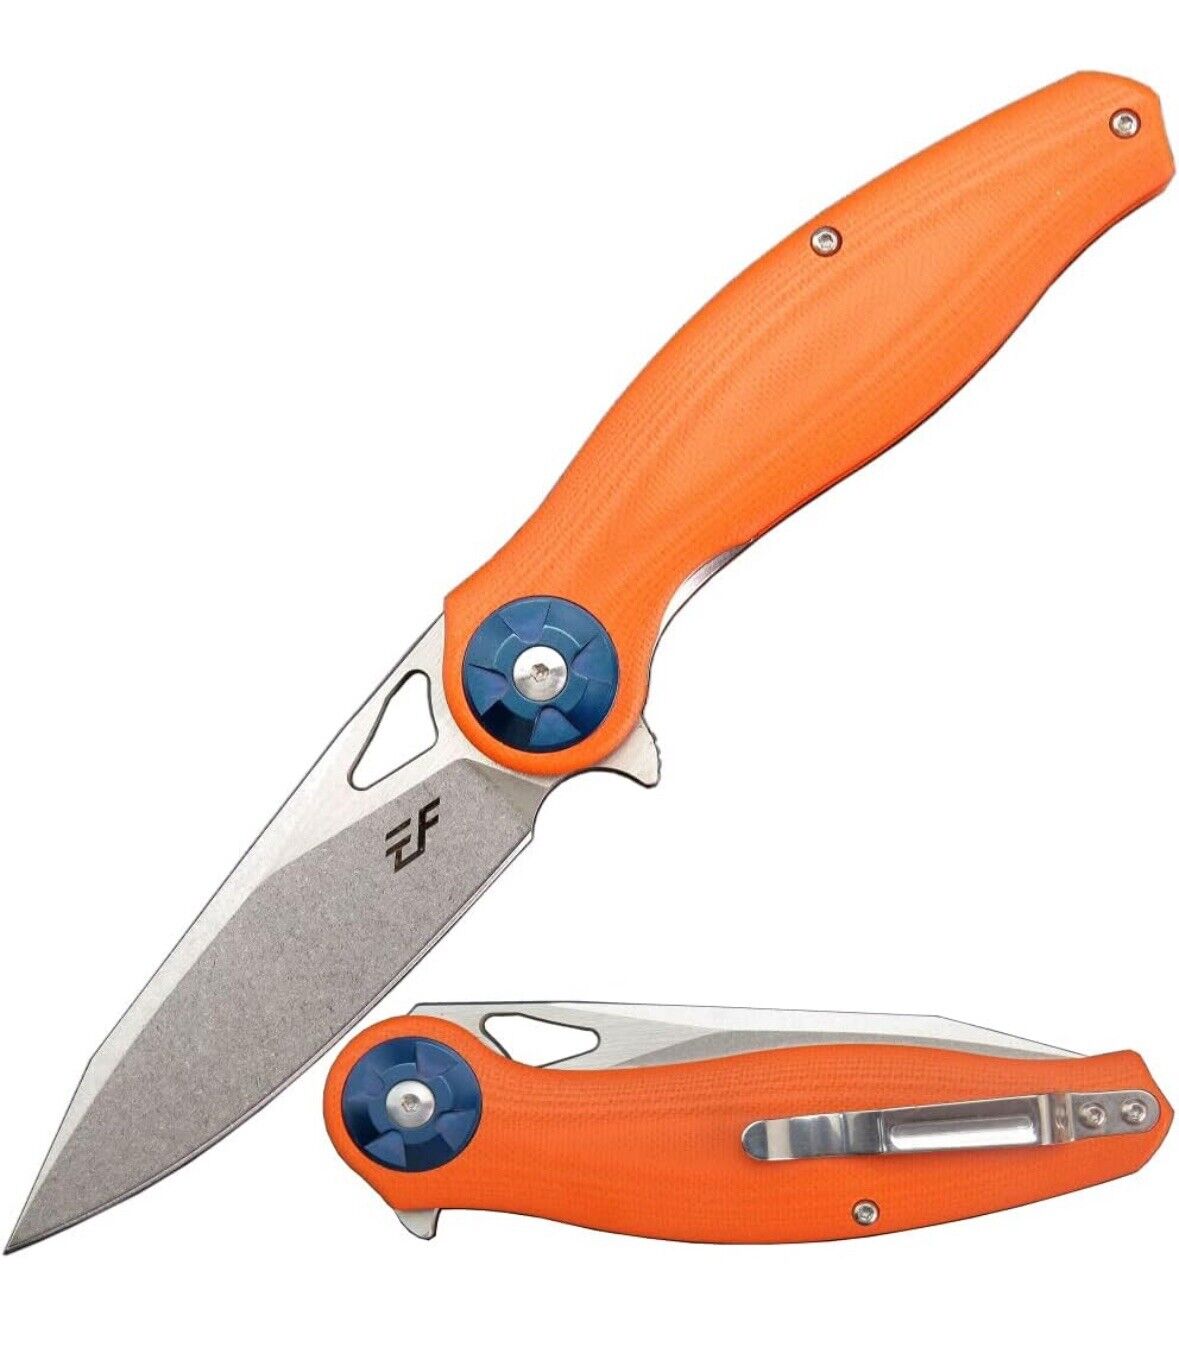 Eafengrow EF76 Pocket Knife With G10 Handle Ball Bearing Folding Knife, Orange